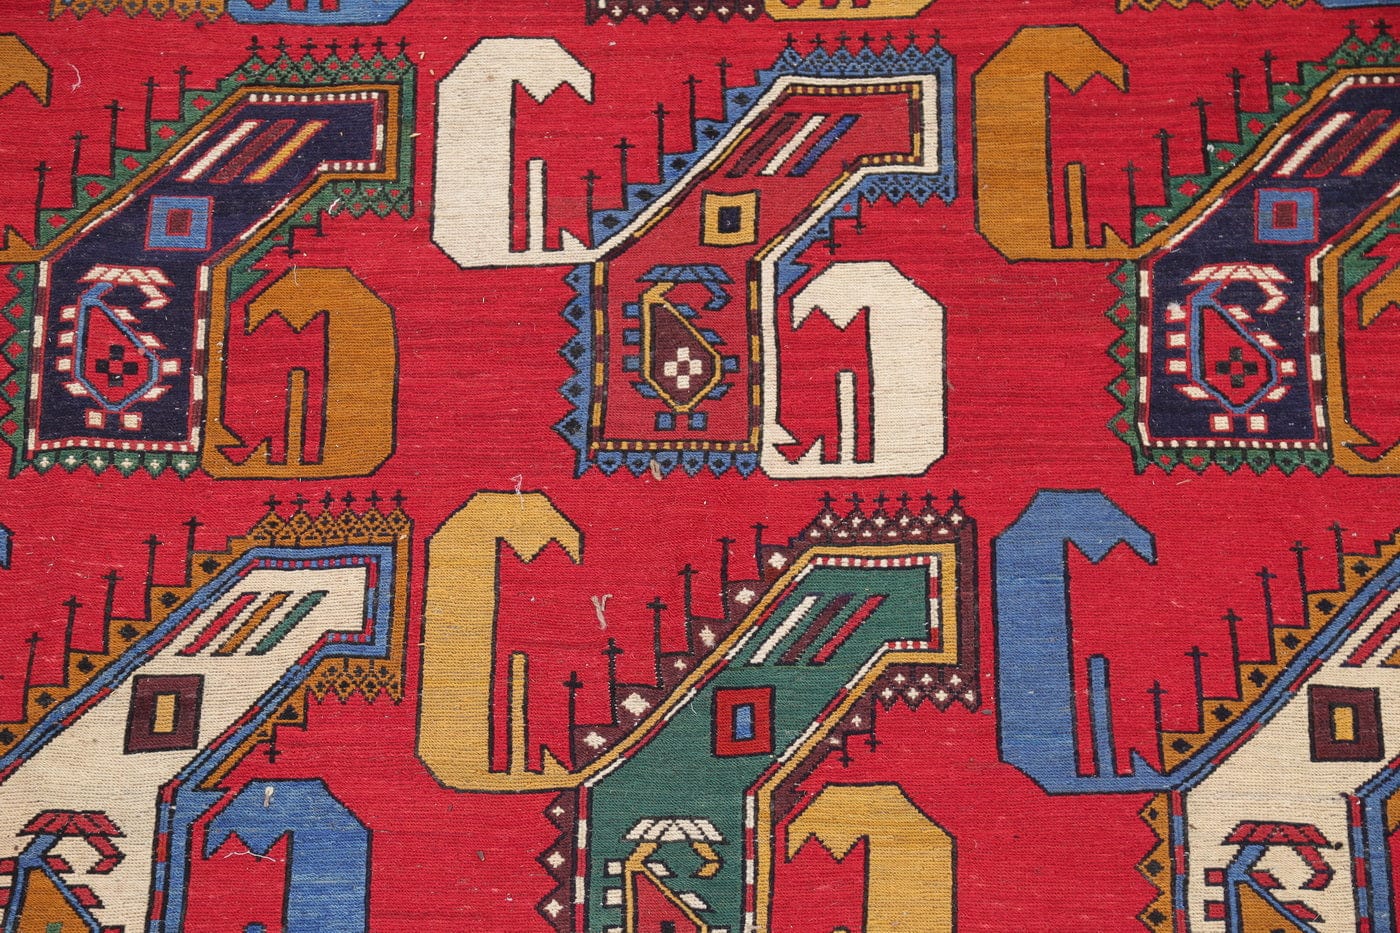 Hand-Woven Red Geometric Kilim Shiraz Persian Area Rug Wool 7x10